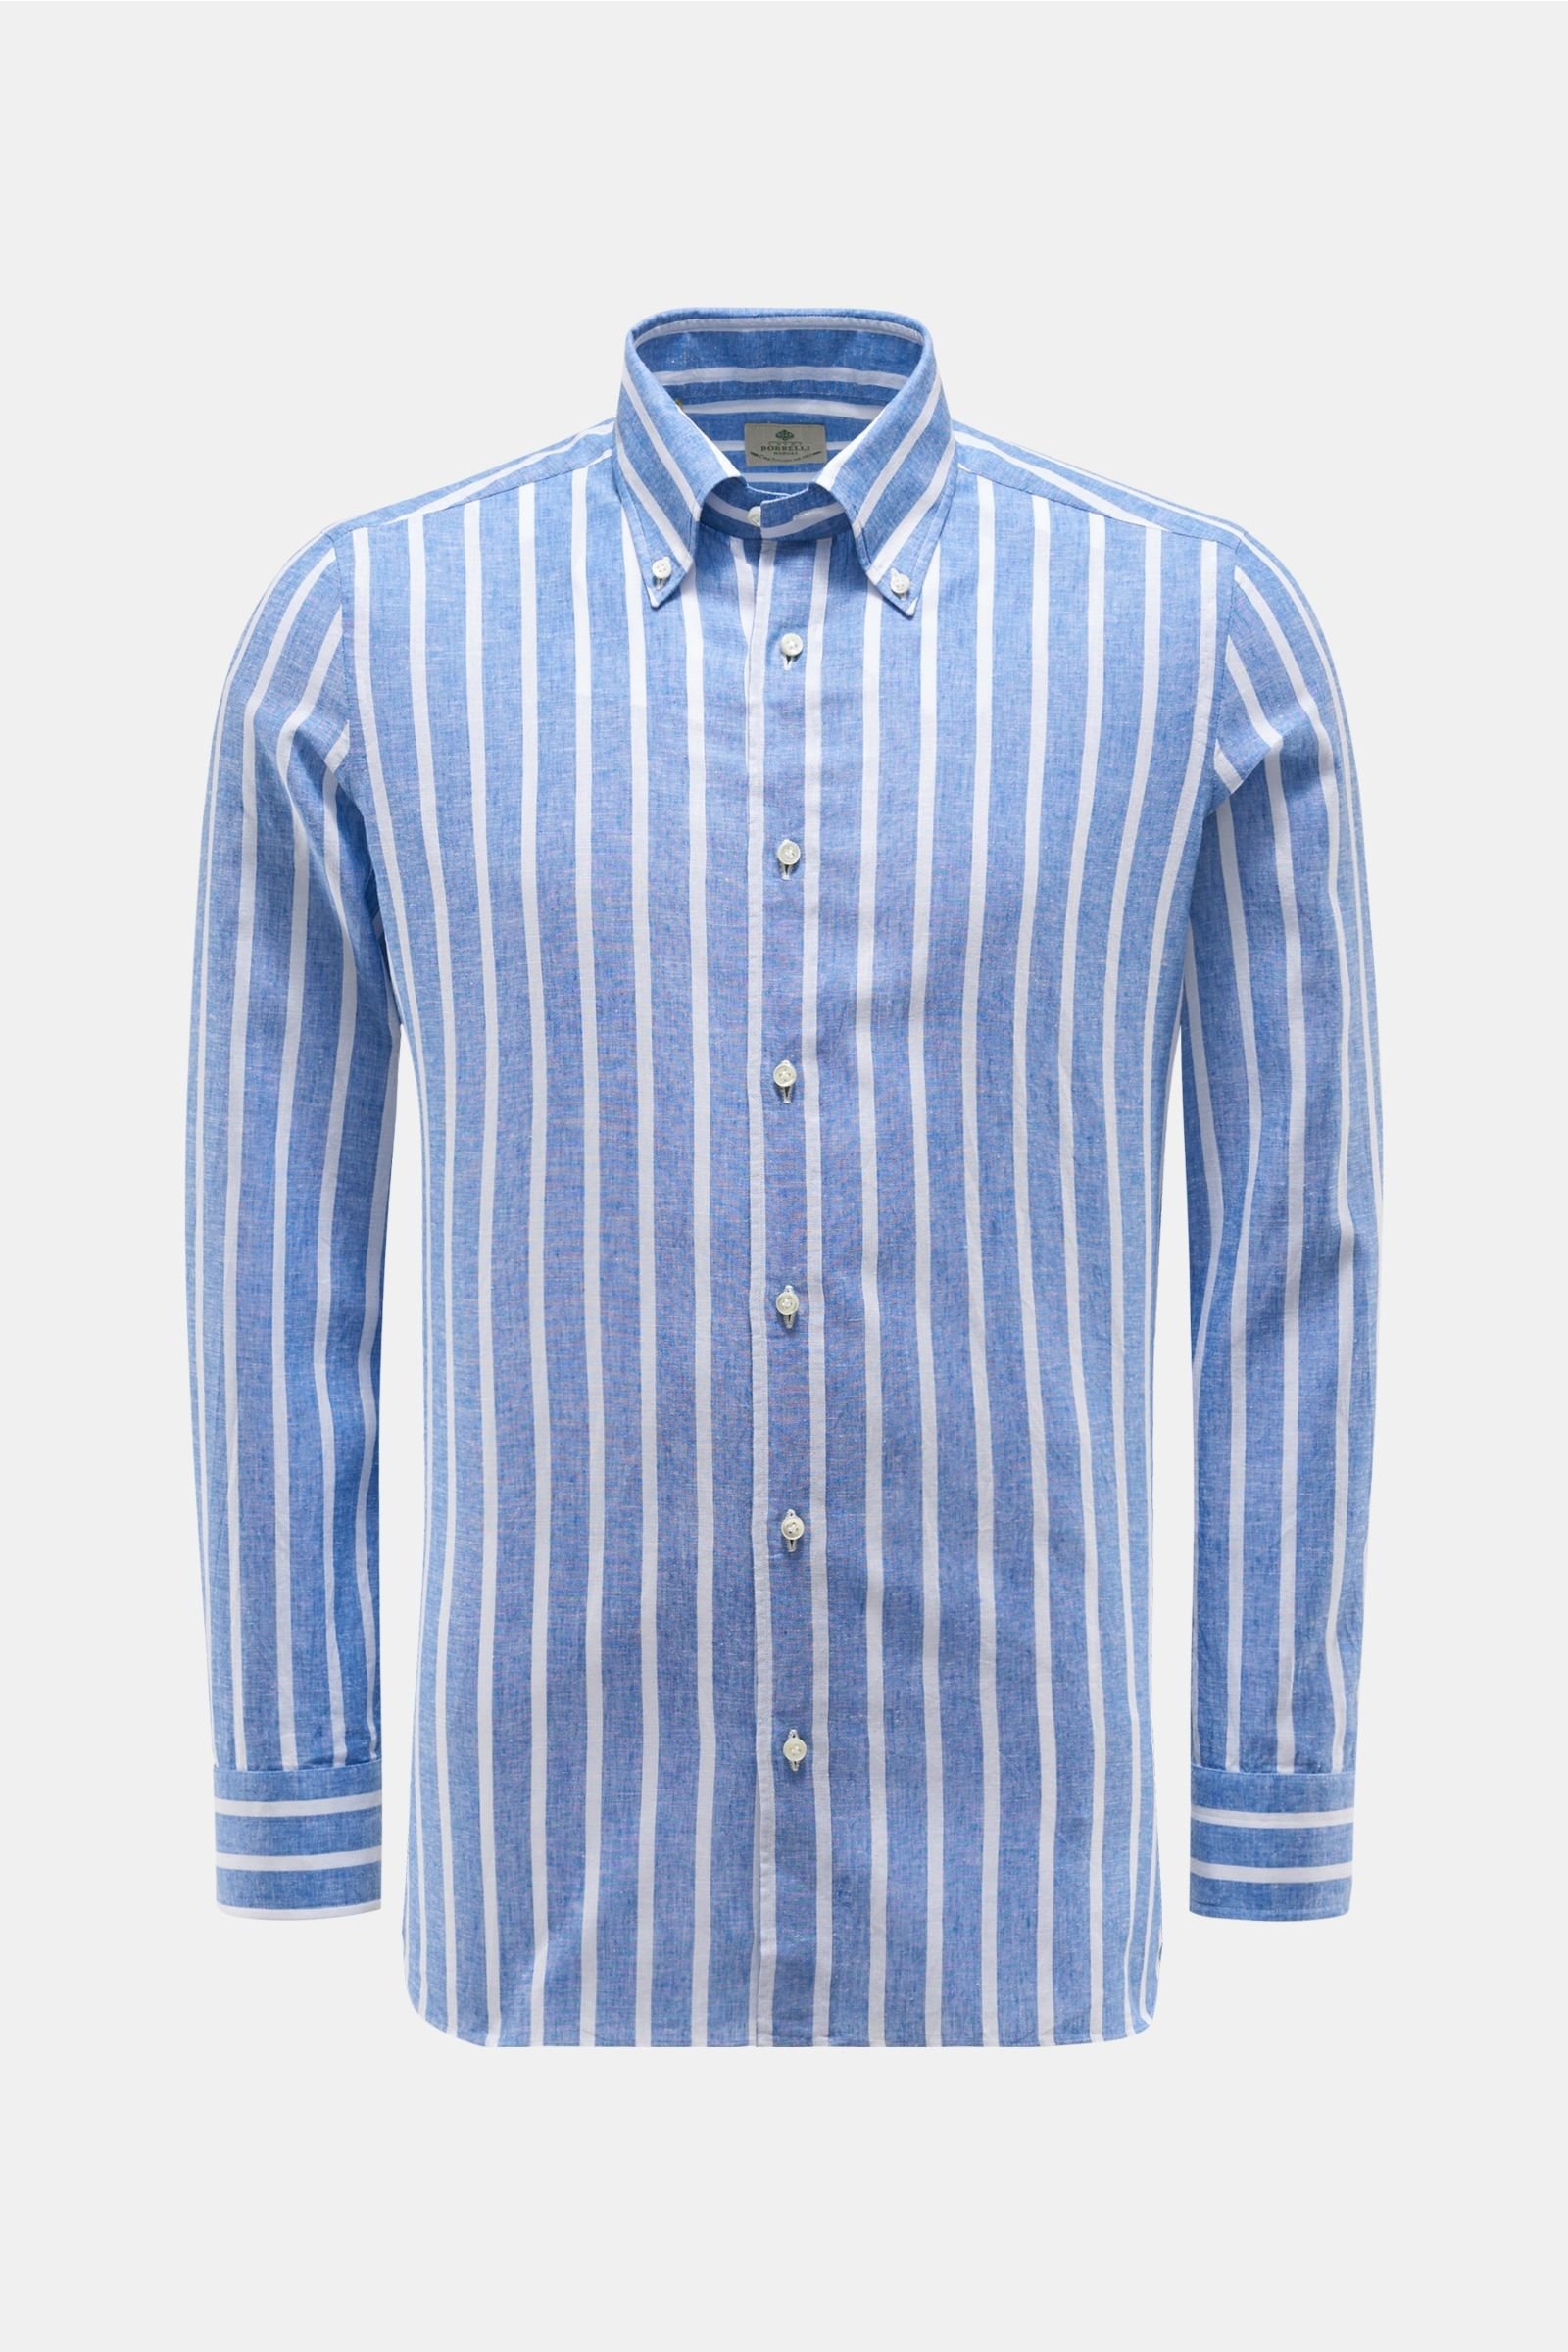 Casual shirt 'Gable' button-down collar smoky blue/white striped